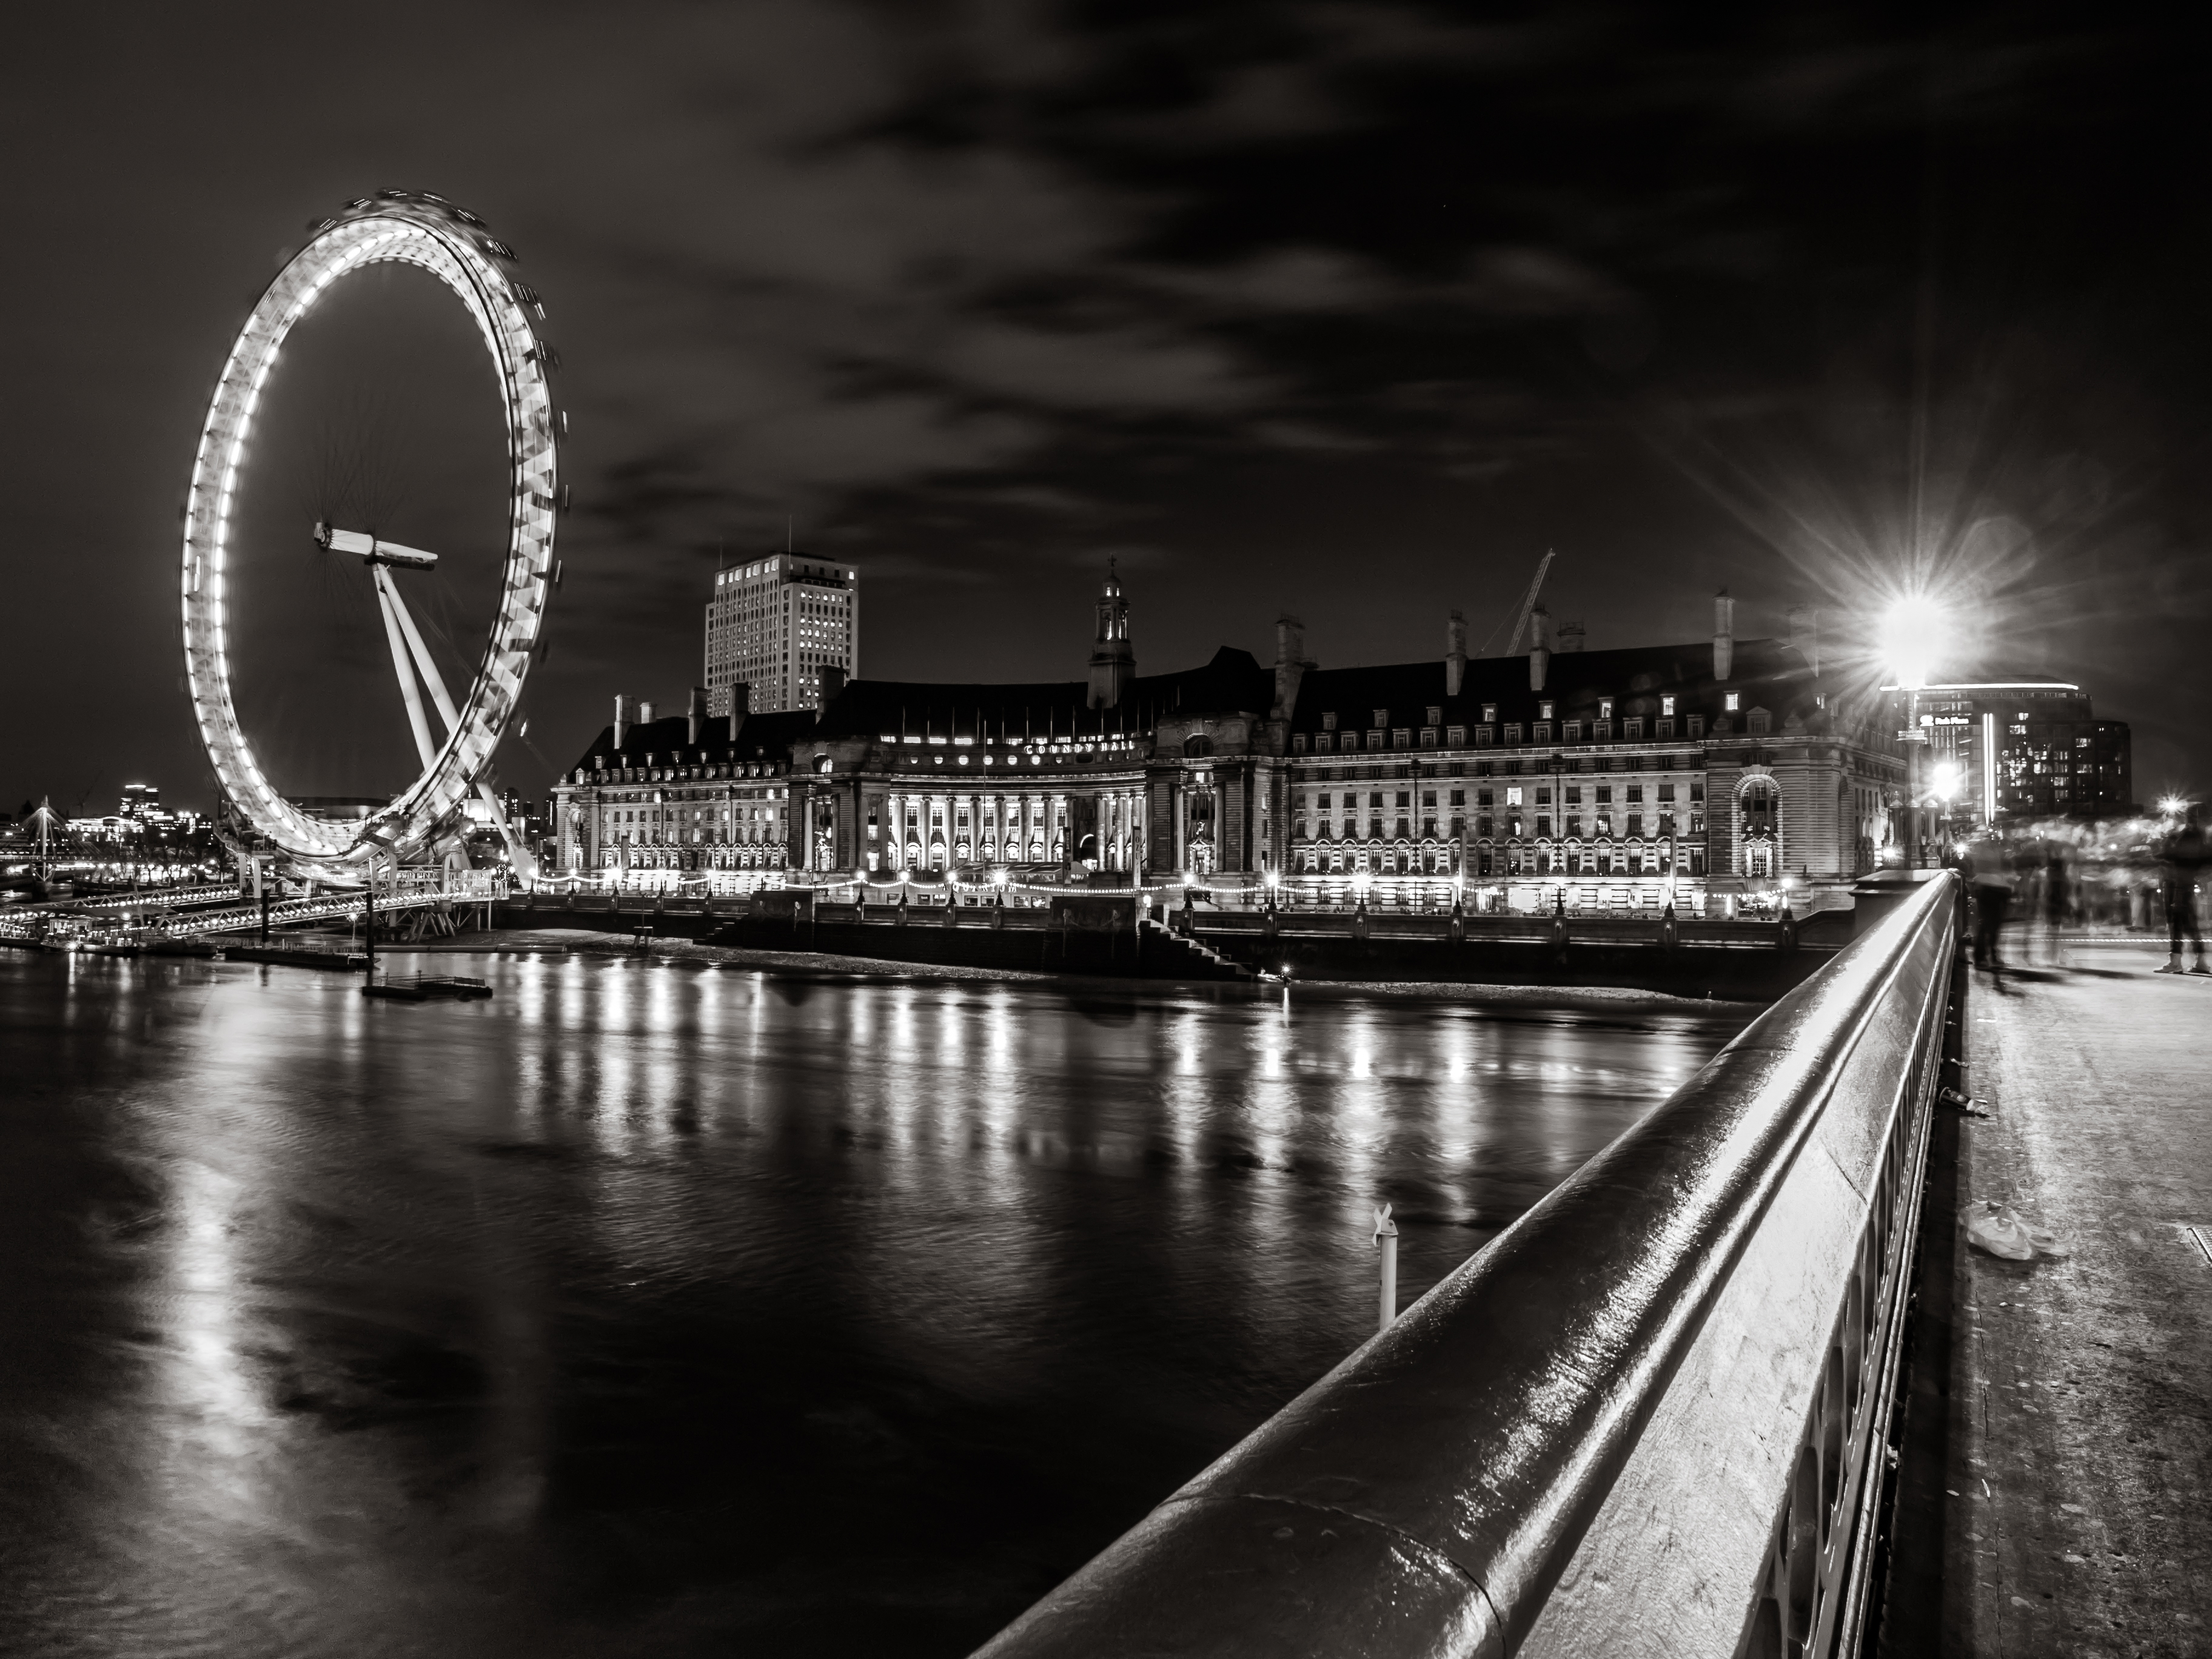 File:London Eye, Black and White, Night.jpg - Wikimedia Commons